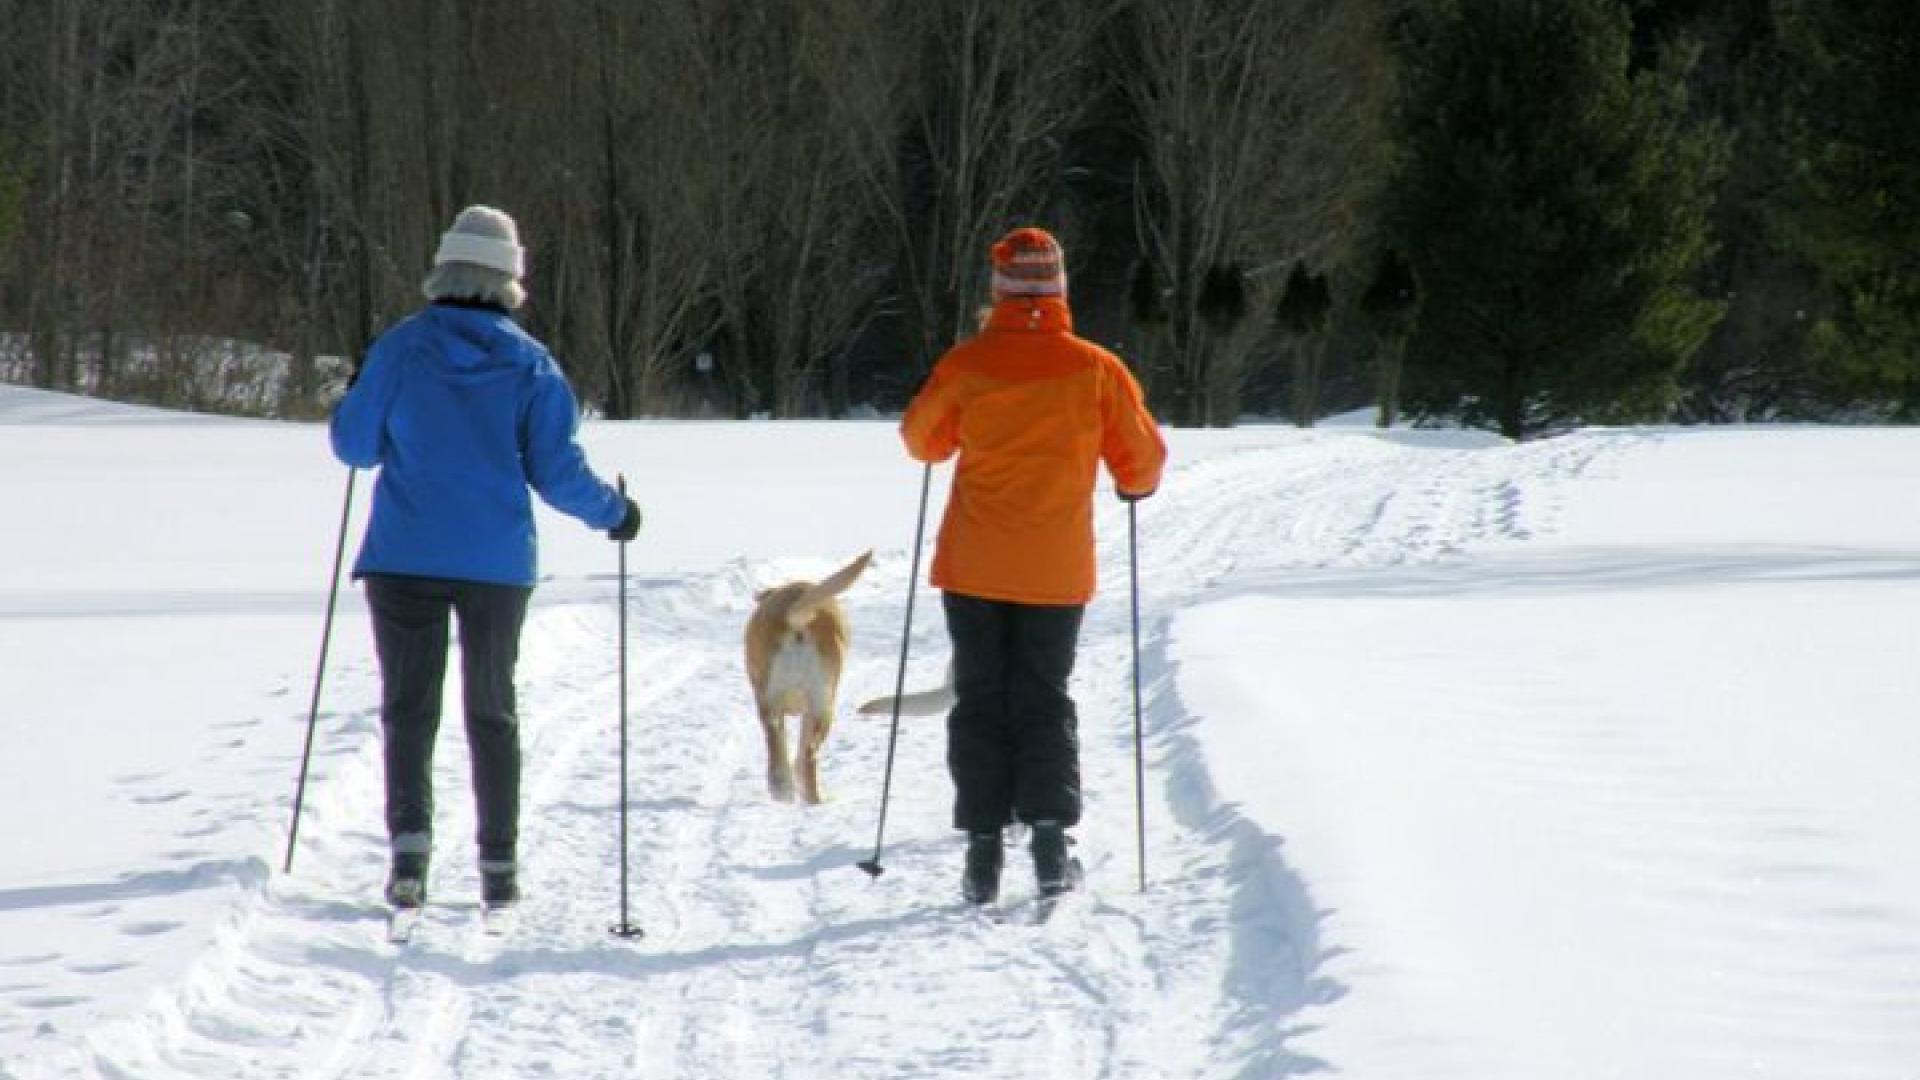 Warren County Nordic Ski Trail System